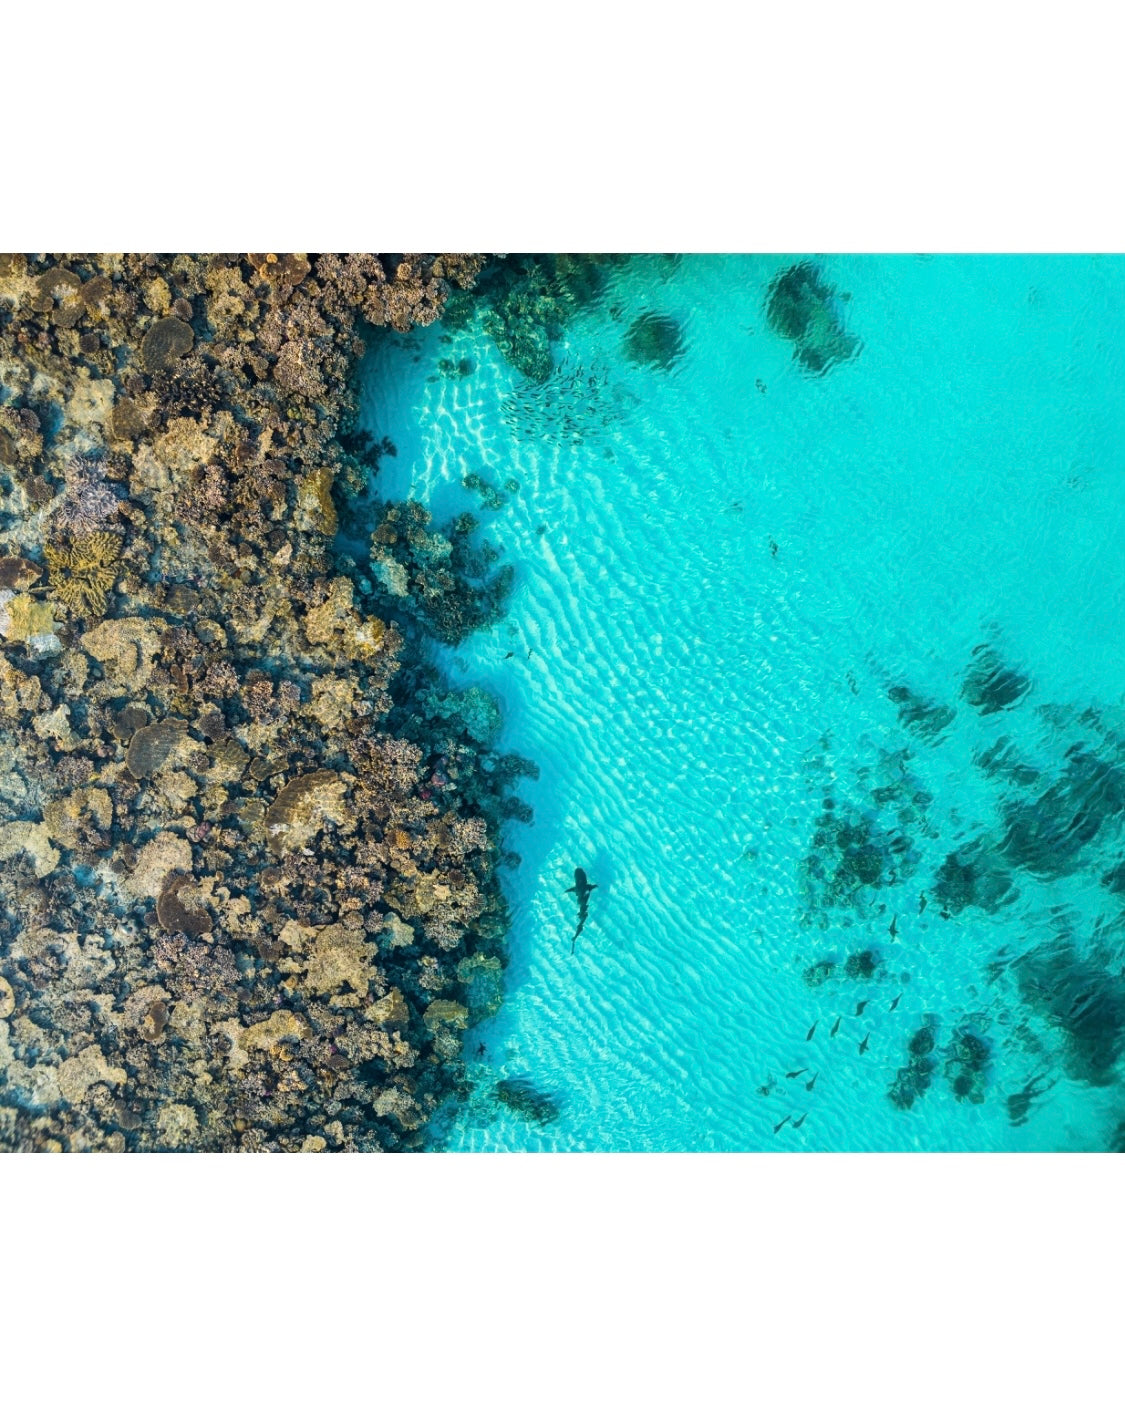 The Reef | Ningaloo